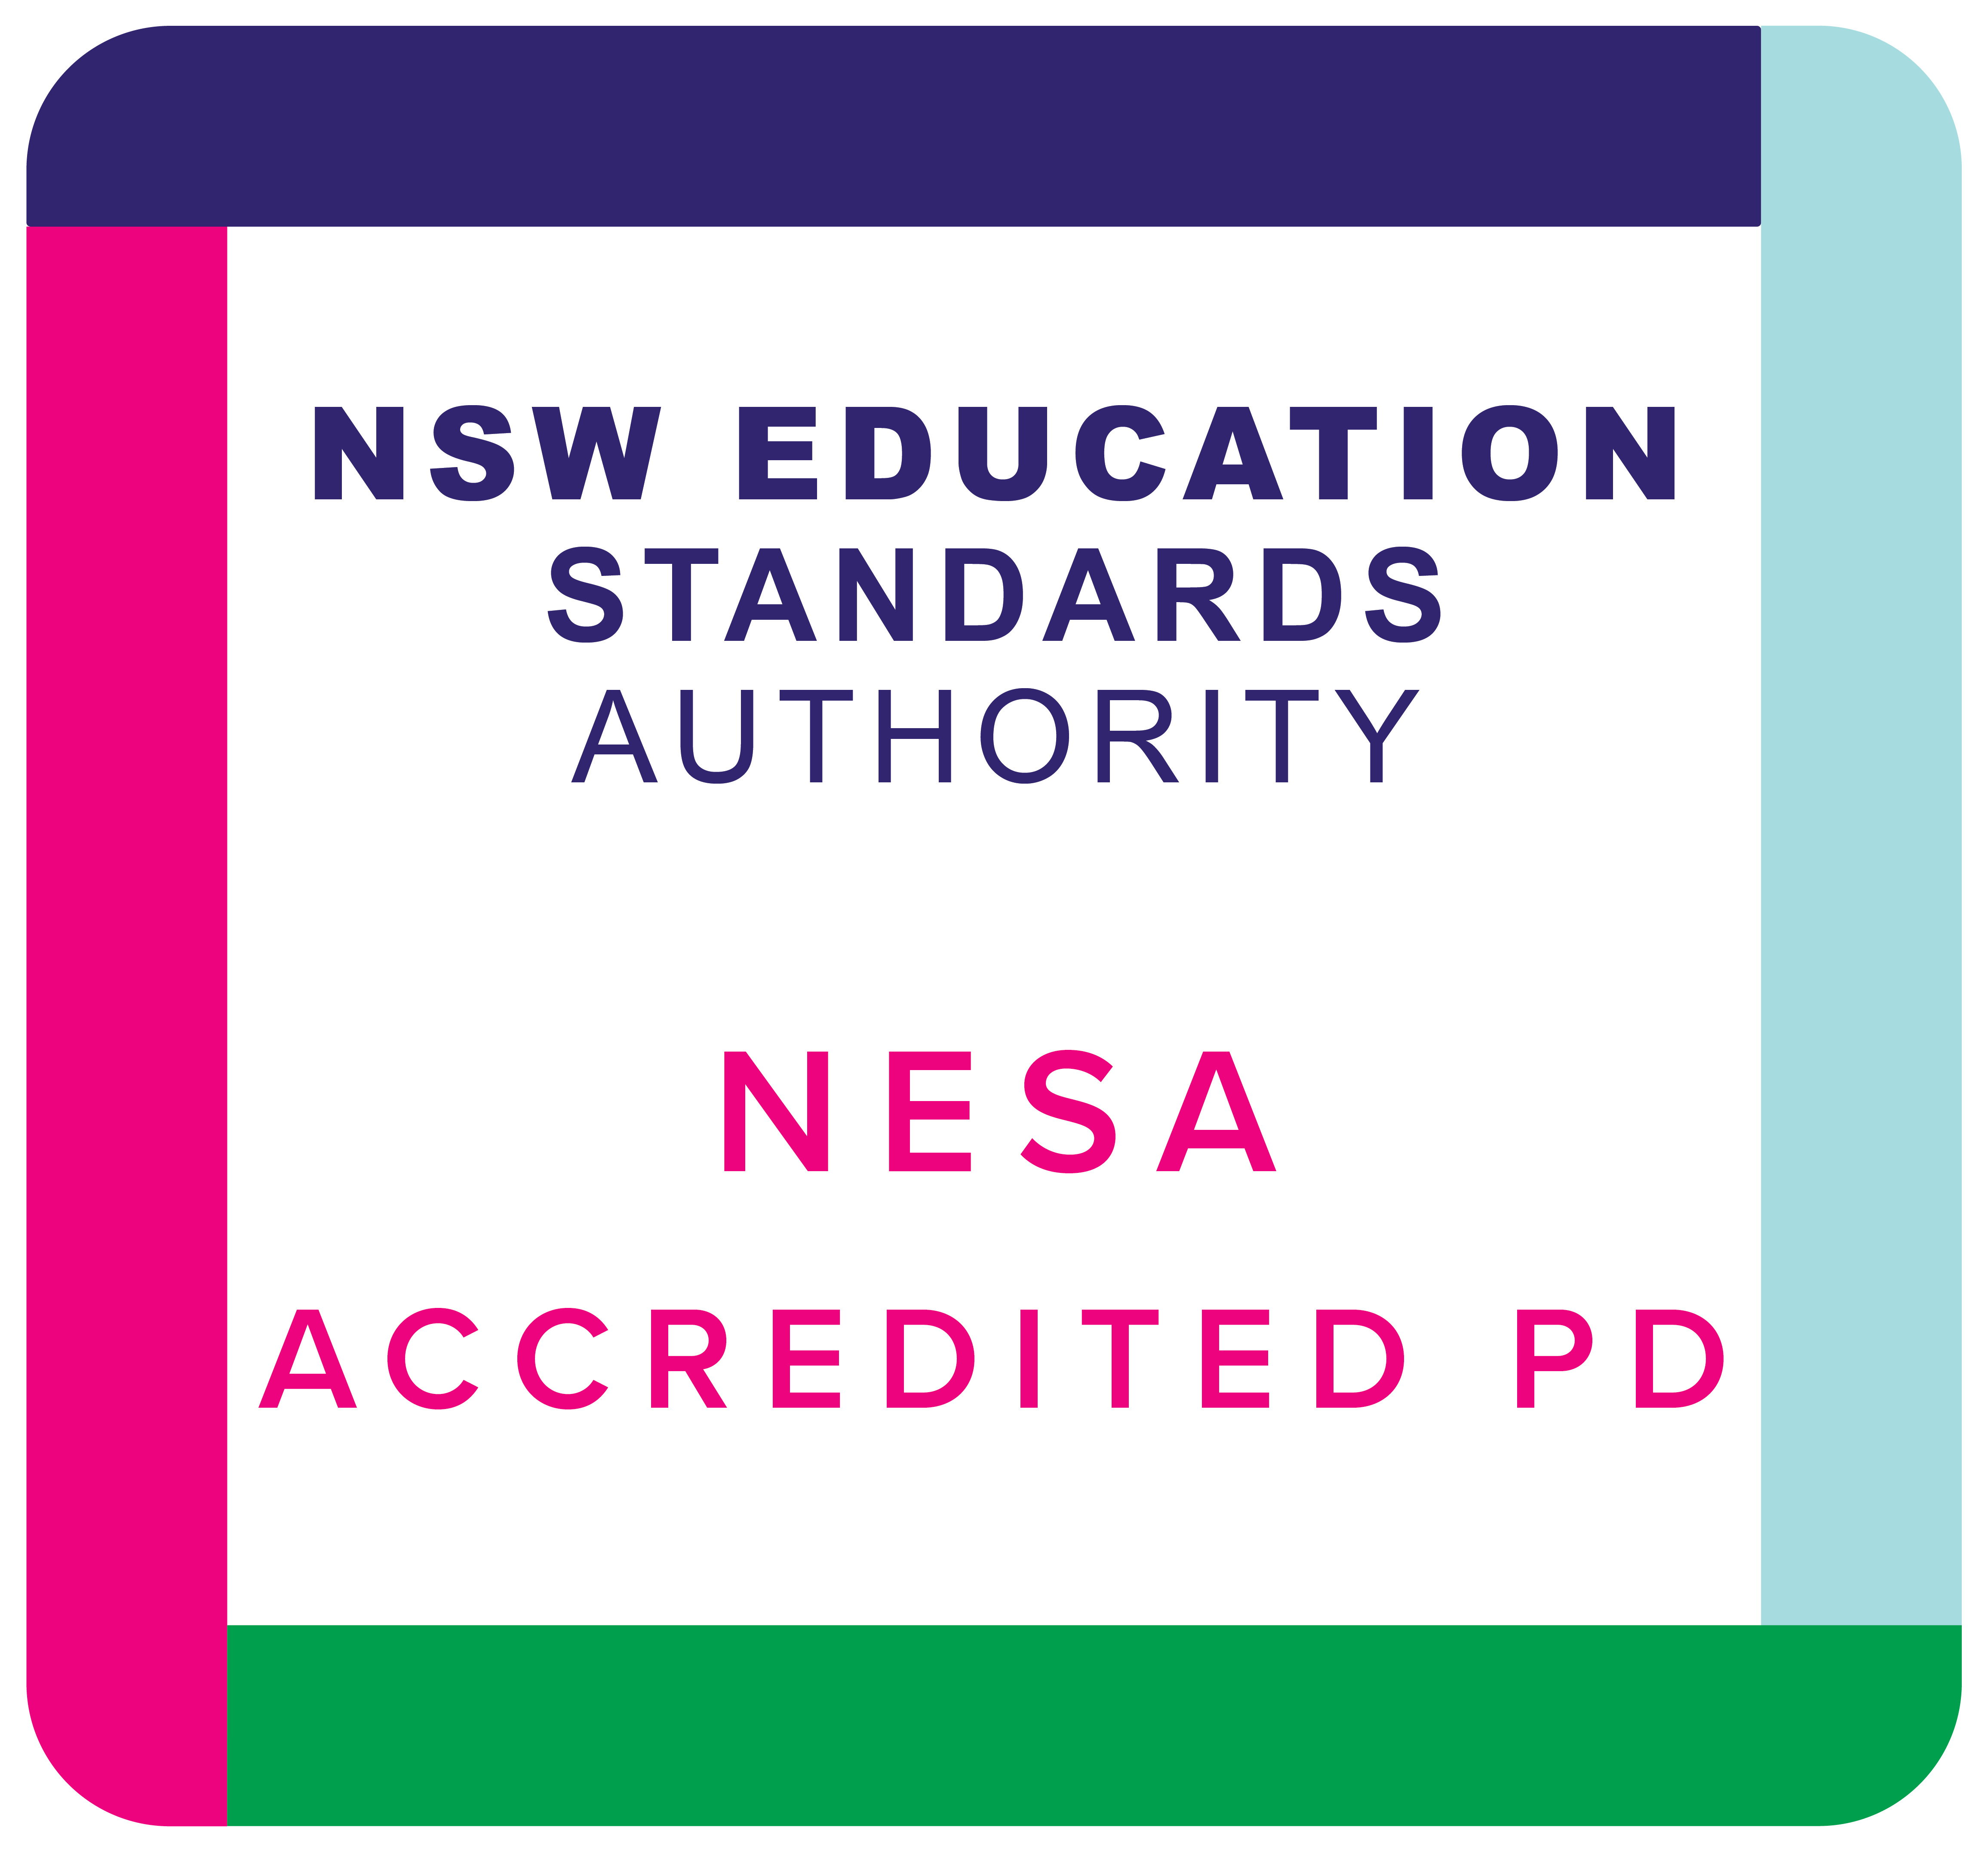 NESA accredited